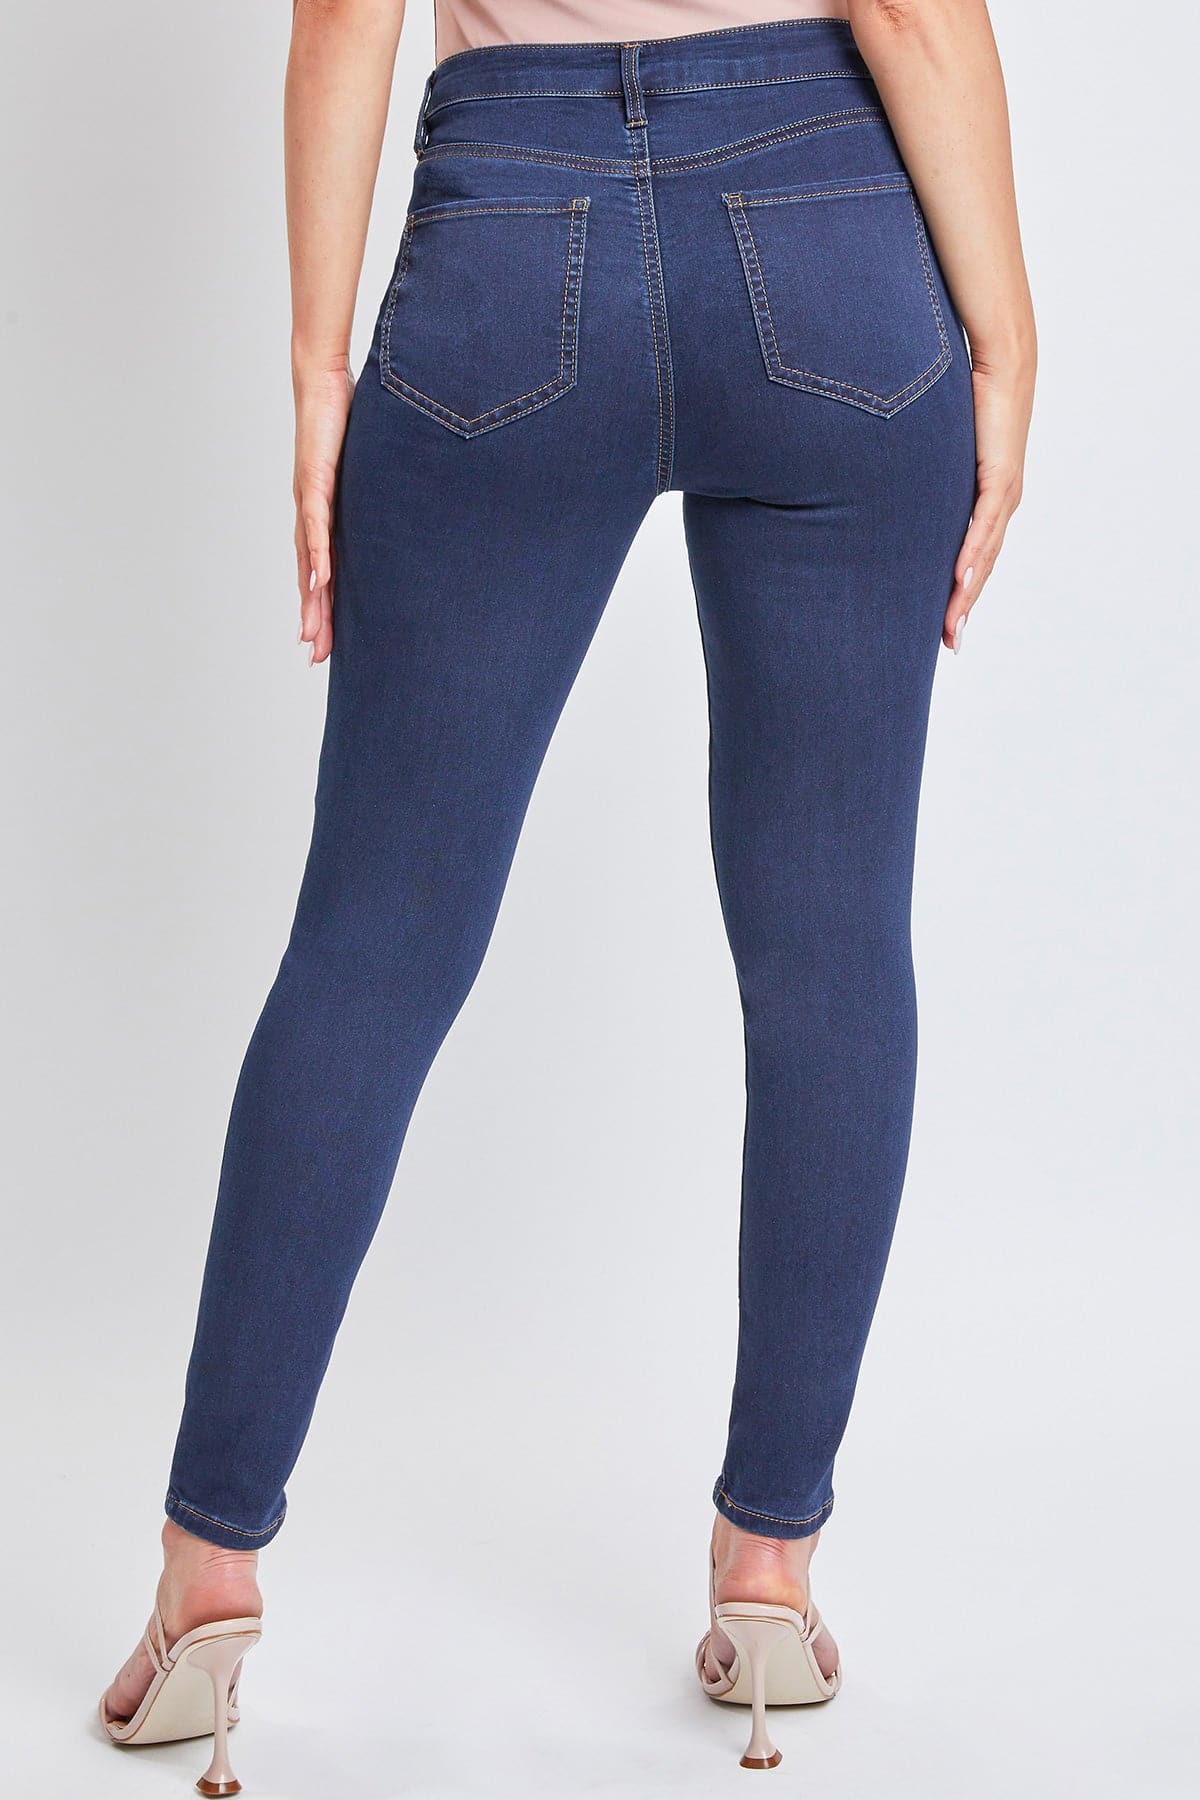 Women's HyperDenim Super Stretchy Jeans